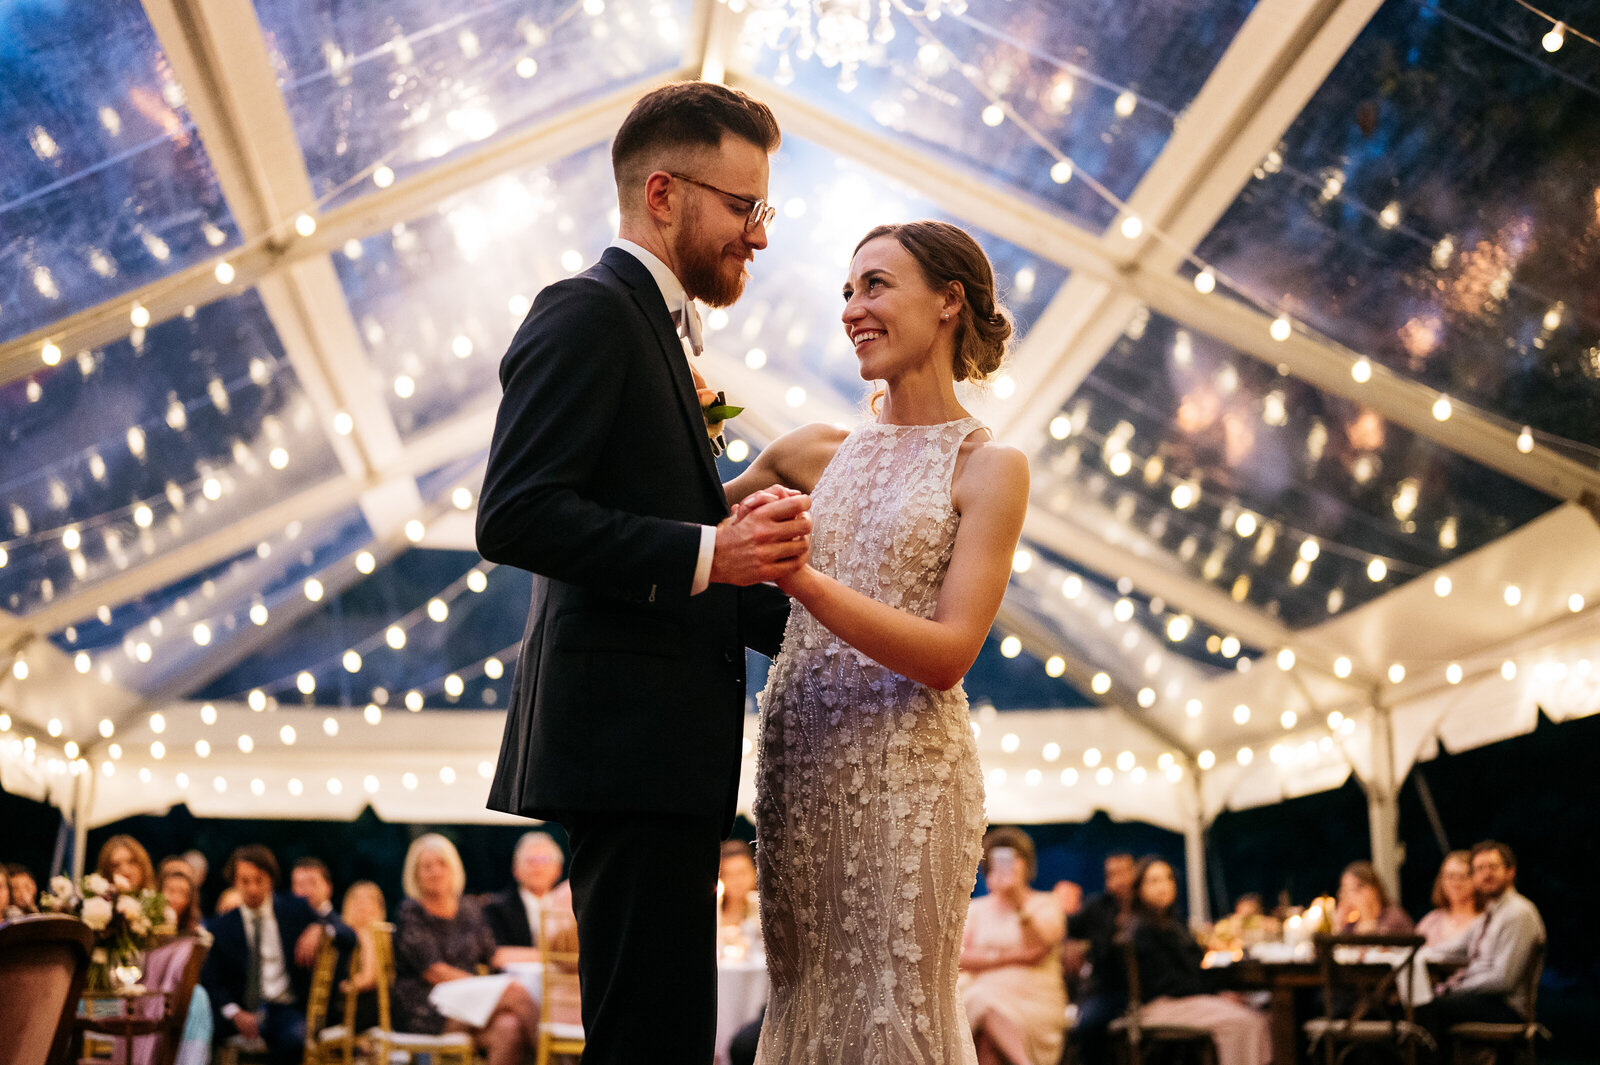 first-dance-clear-top-tent-lights-elegant-wedding